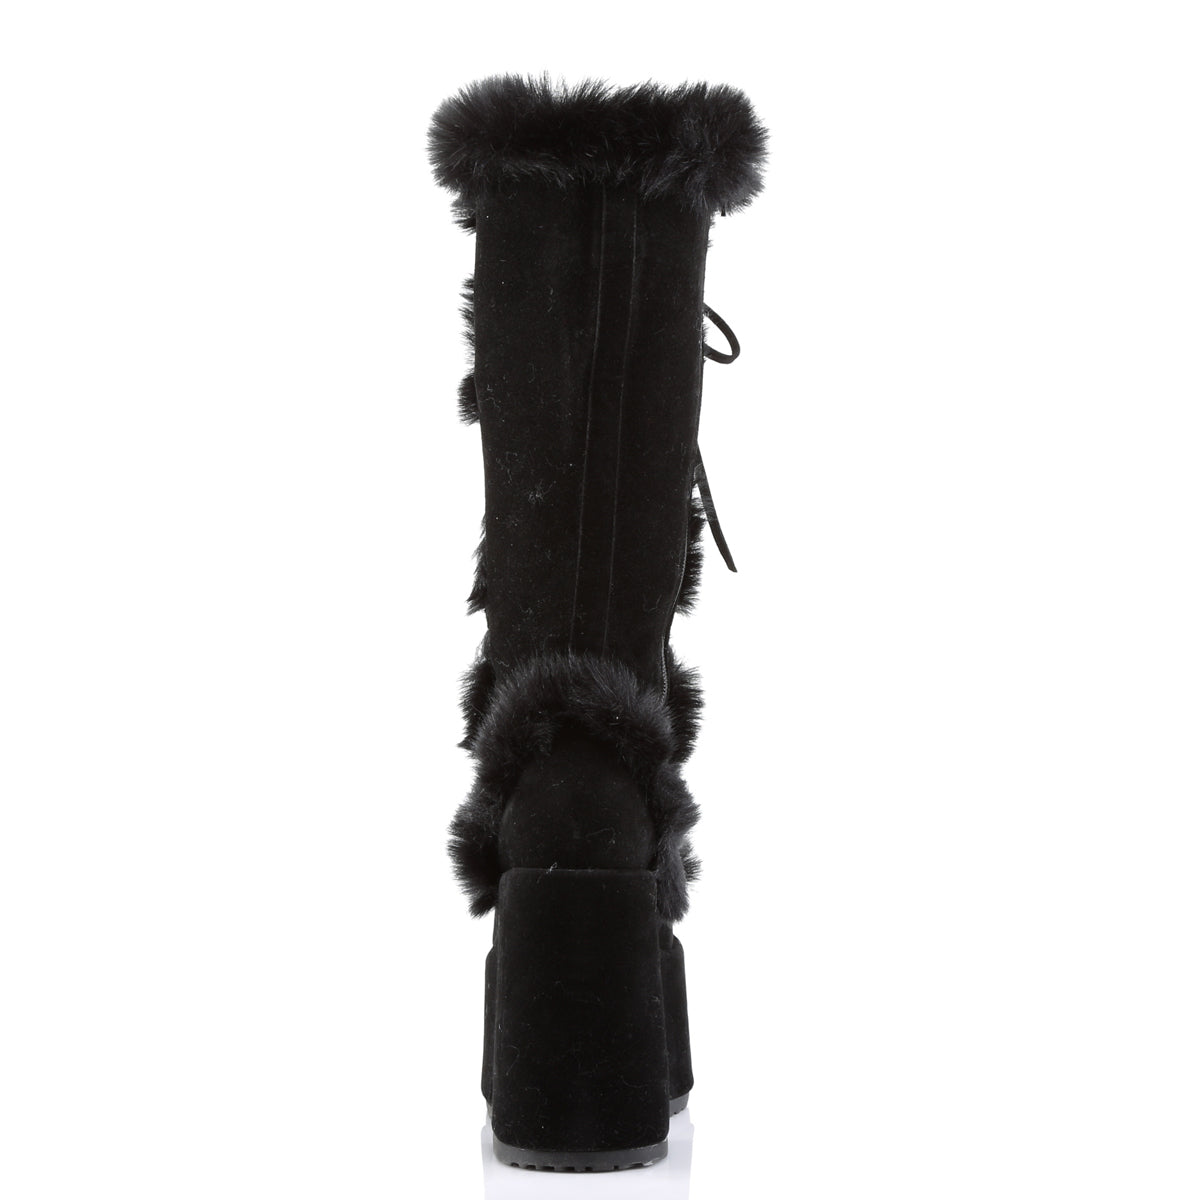 Demonia Black Furry Winter Faux Fur Boots